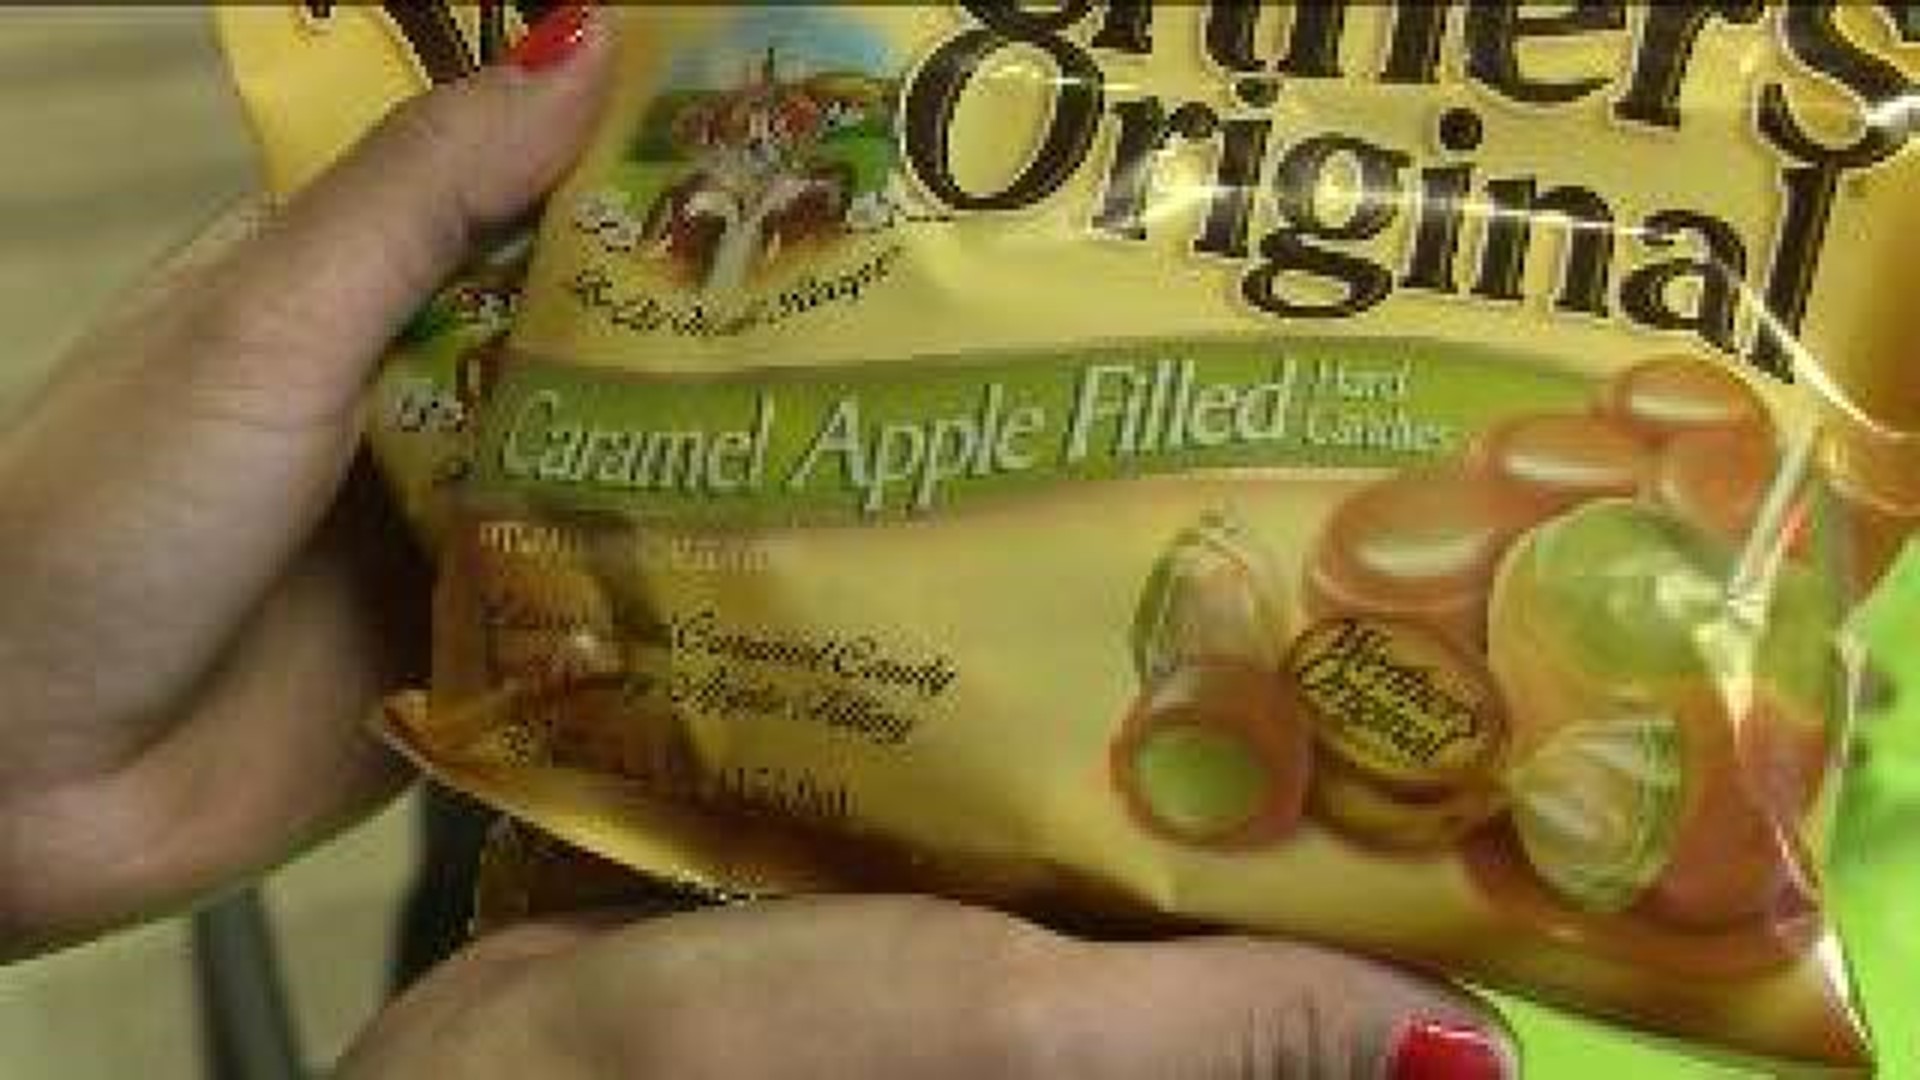 Taste Test: Werthers Original Carmel Apple Filled Hard Candies